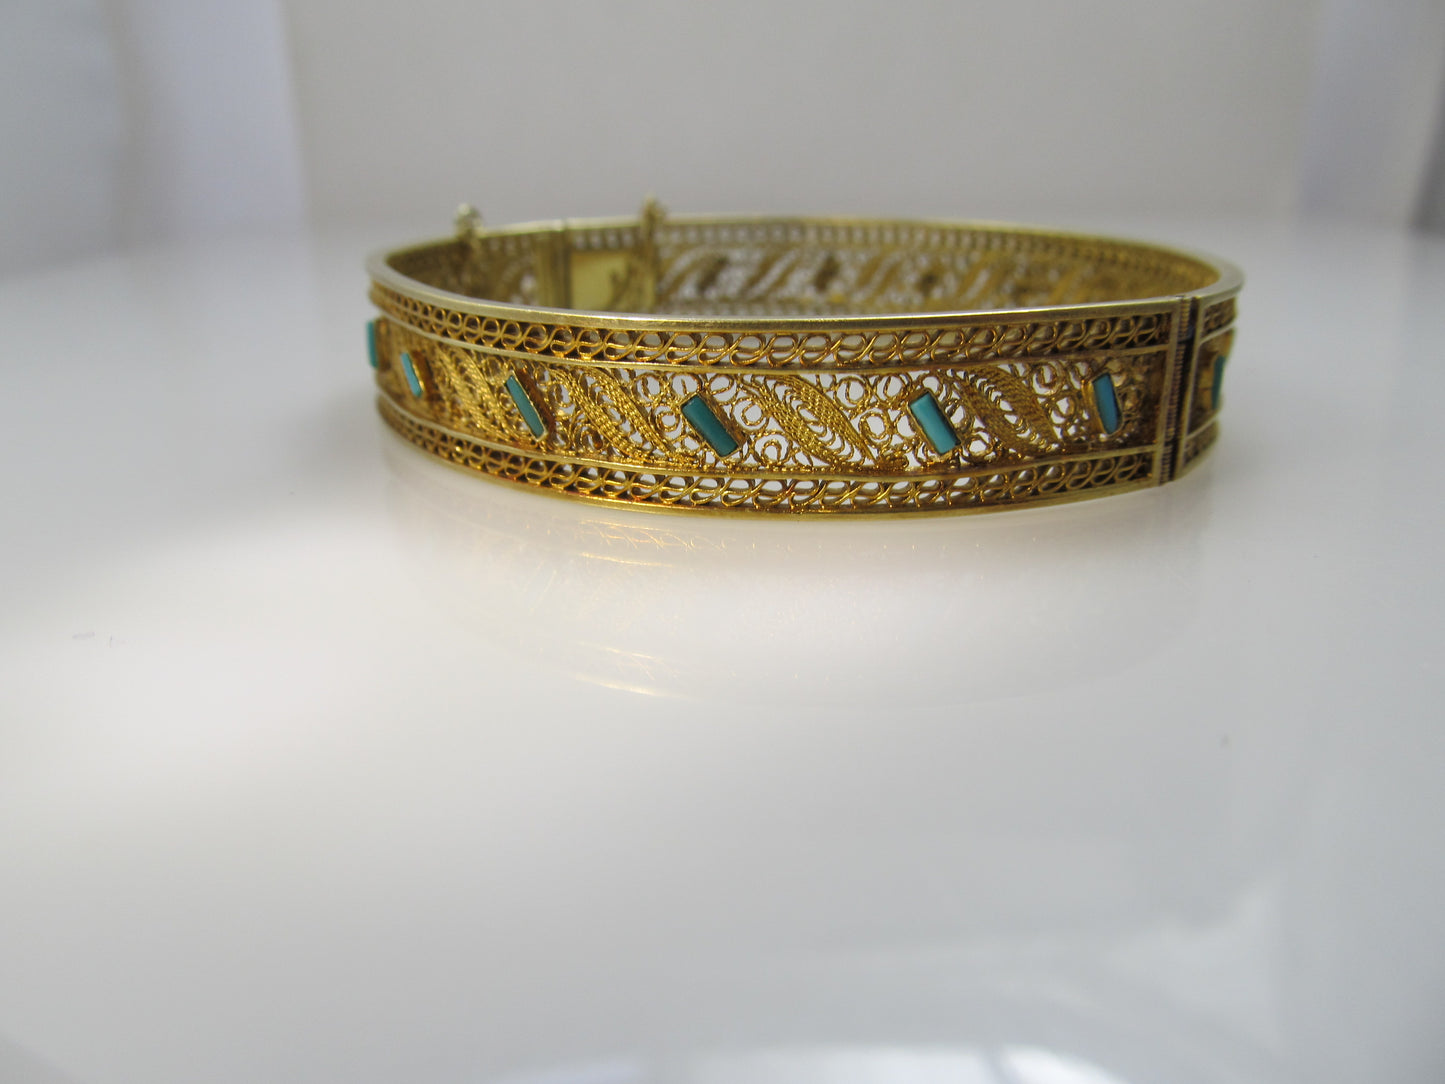 Antique 14k yellow gold filigree bangle bracelet with turquoise